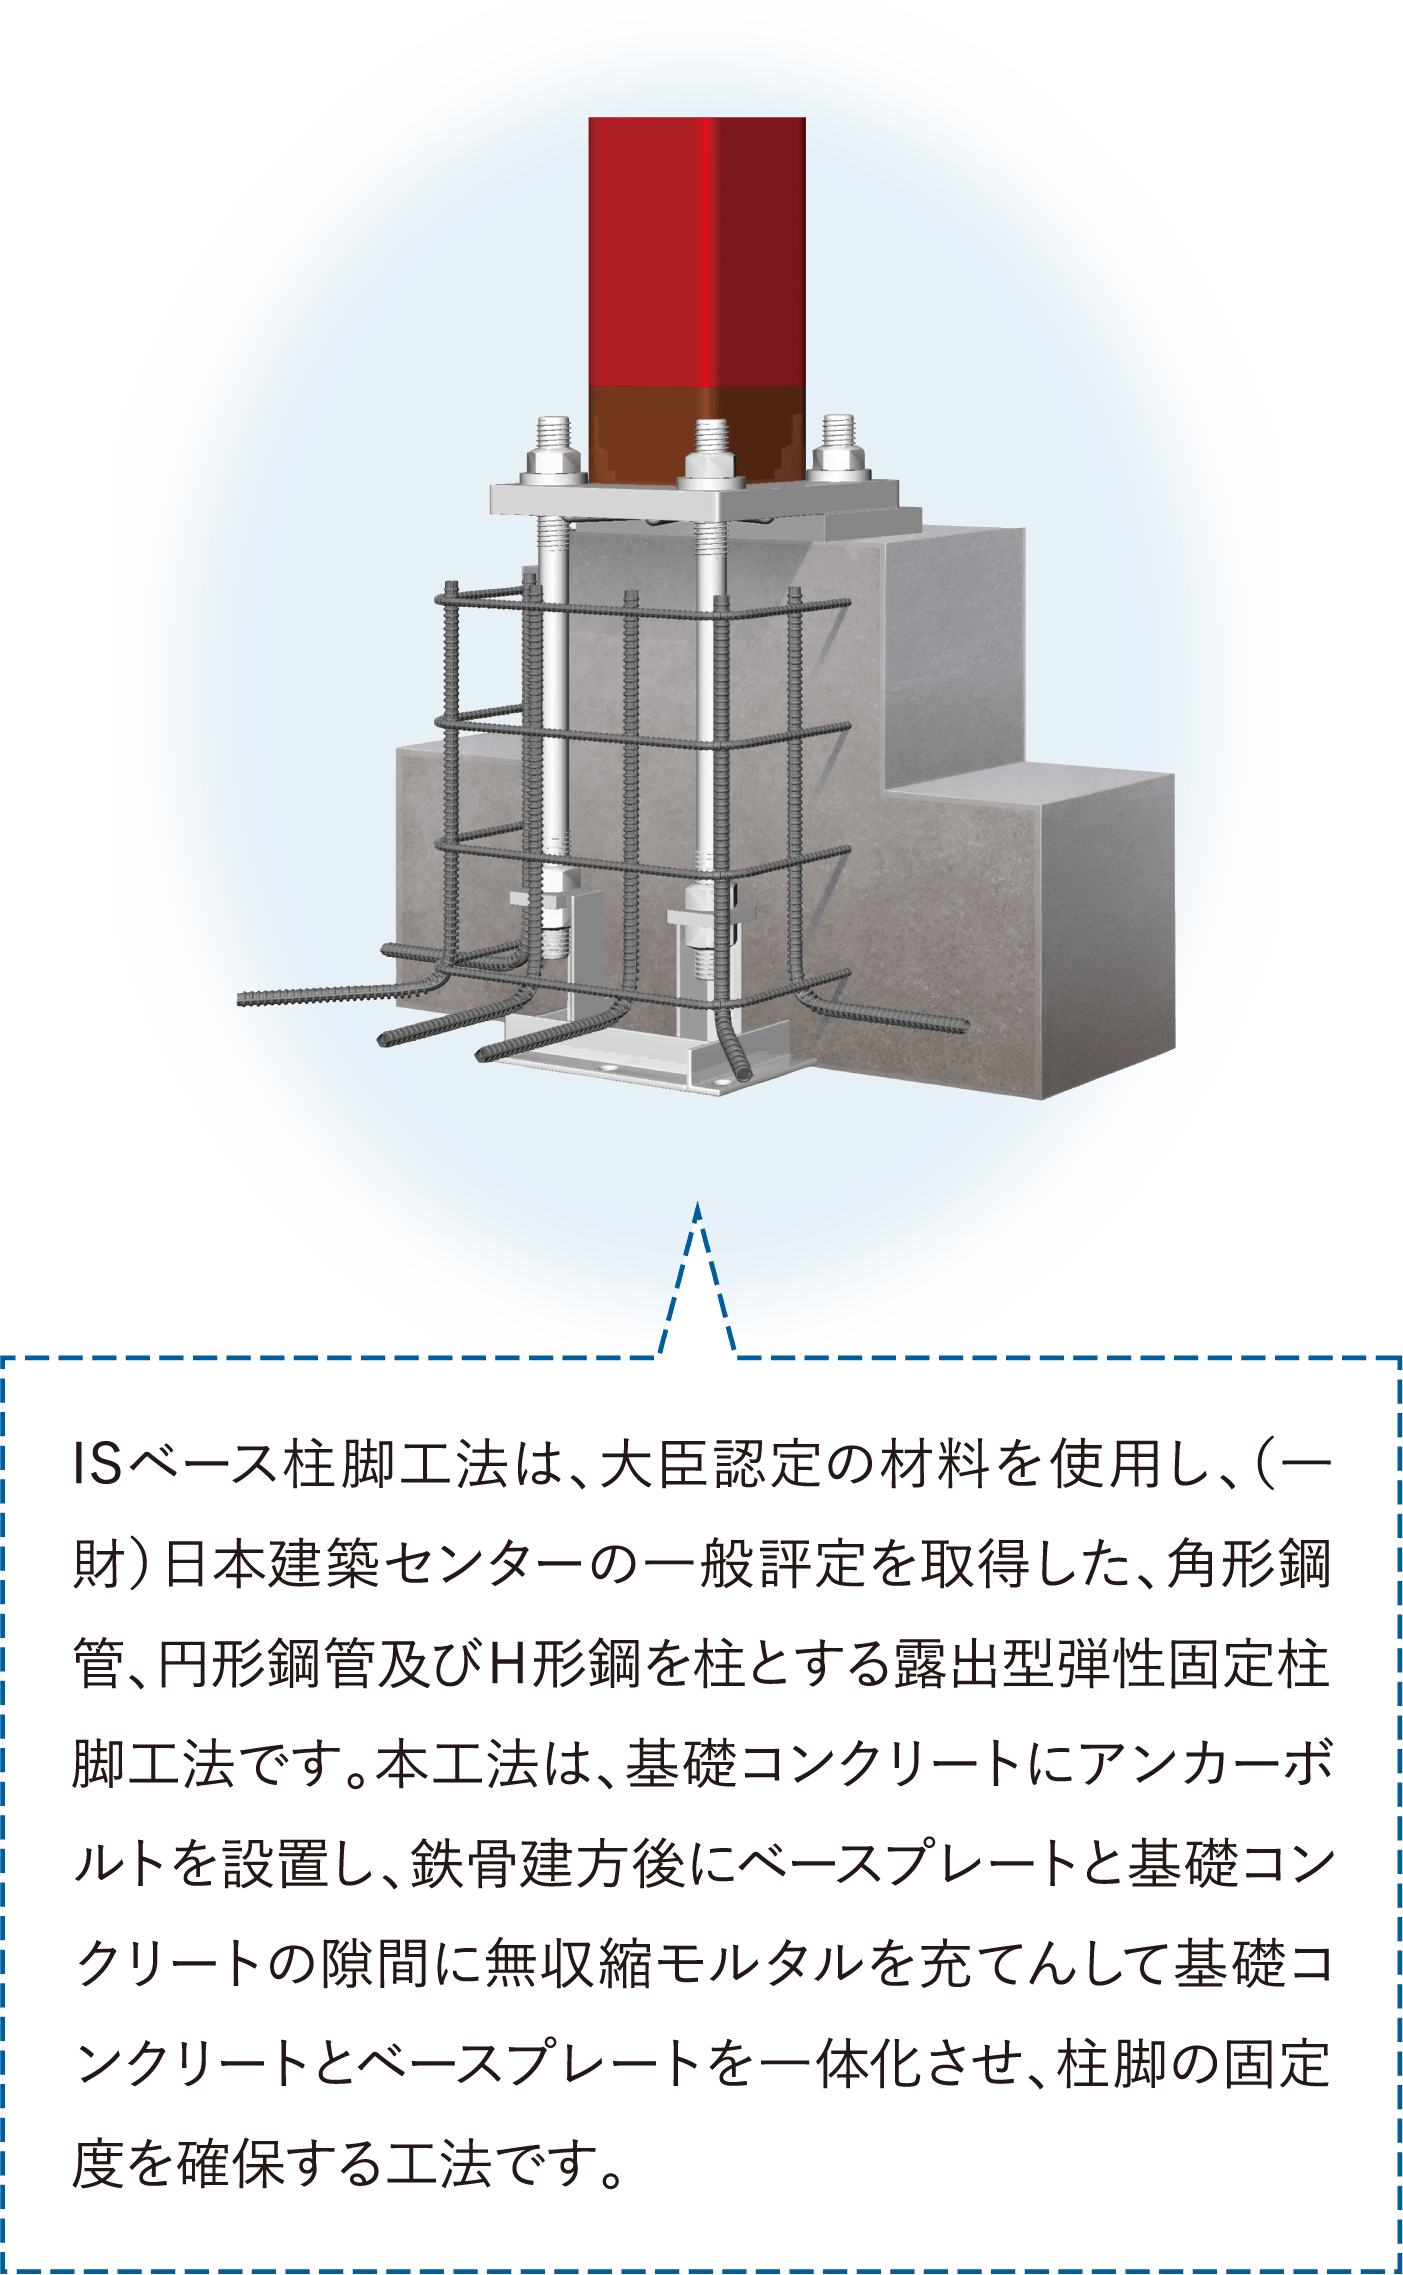 ISベース柱脚工法は、大臣認定の材料を使用し、（一財）日本建築センターの一般評定を取得した、角形鋼管、円形鋼管及びＨ形鋼を柱とする露出型弾性固定柱脚工法です。本工法は、基礎コンクリートにアンカーボルトを設置し、鉄骨建方後にベースプレートと基礎コンクリートの隙間に無収縮モルタルを充てんして基礎コンクリートとベースプレートを一体化させ、柱脚の固定度を確保する工法です。